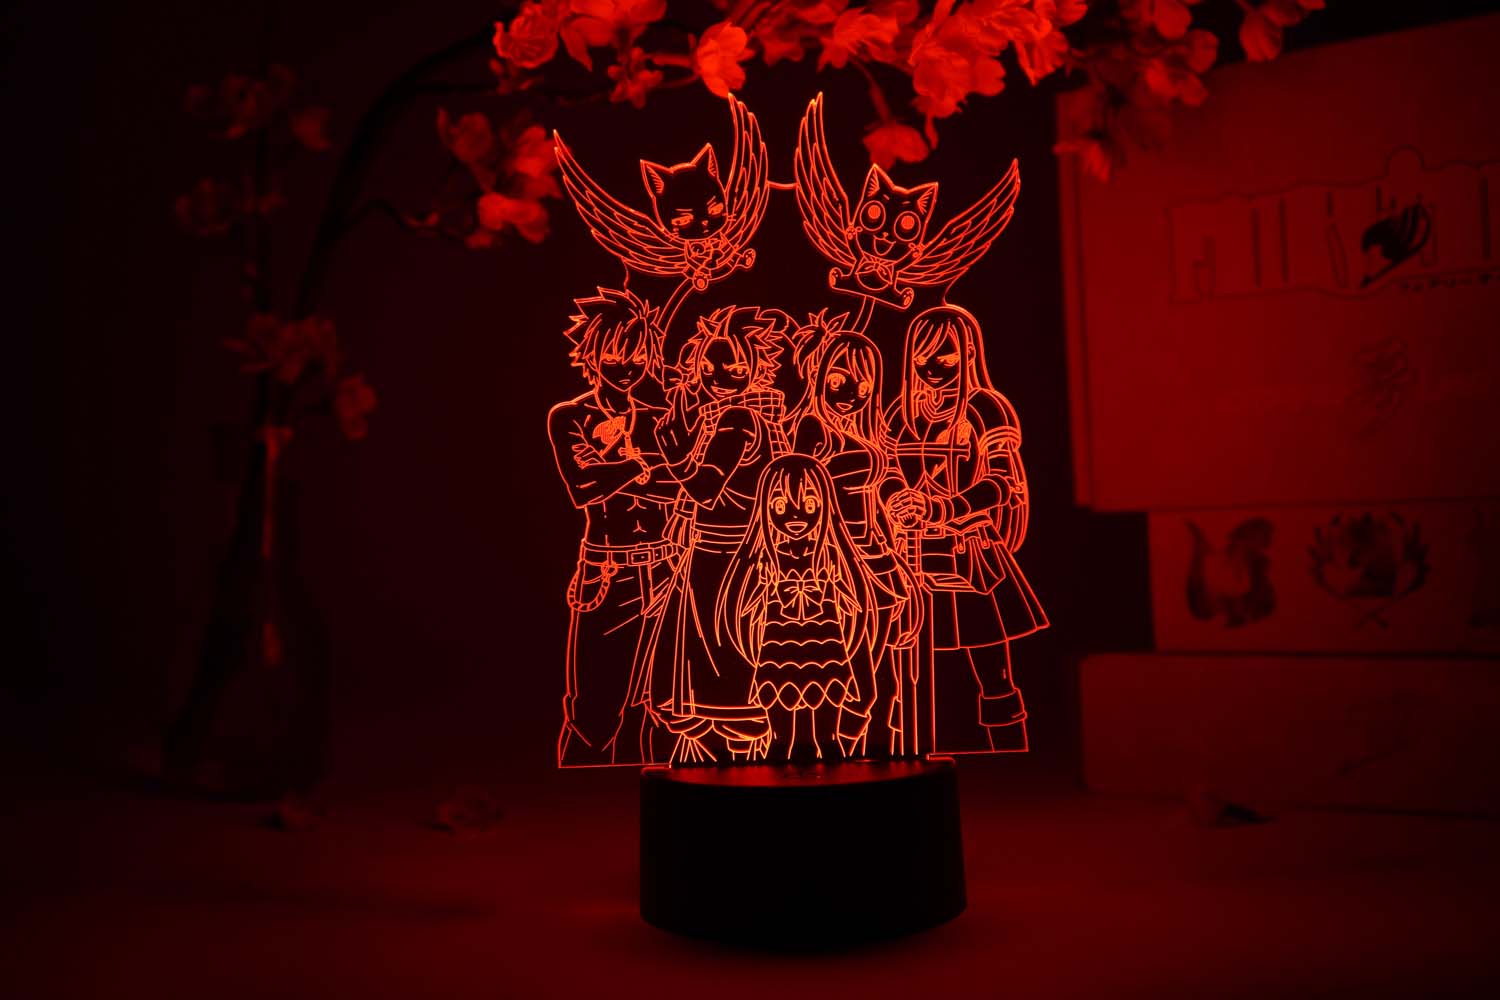 Fairy Tail Guild Otaku Lamp (Fairy Tail)